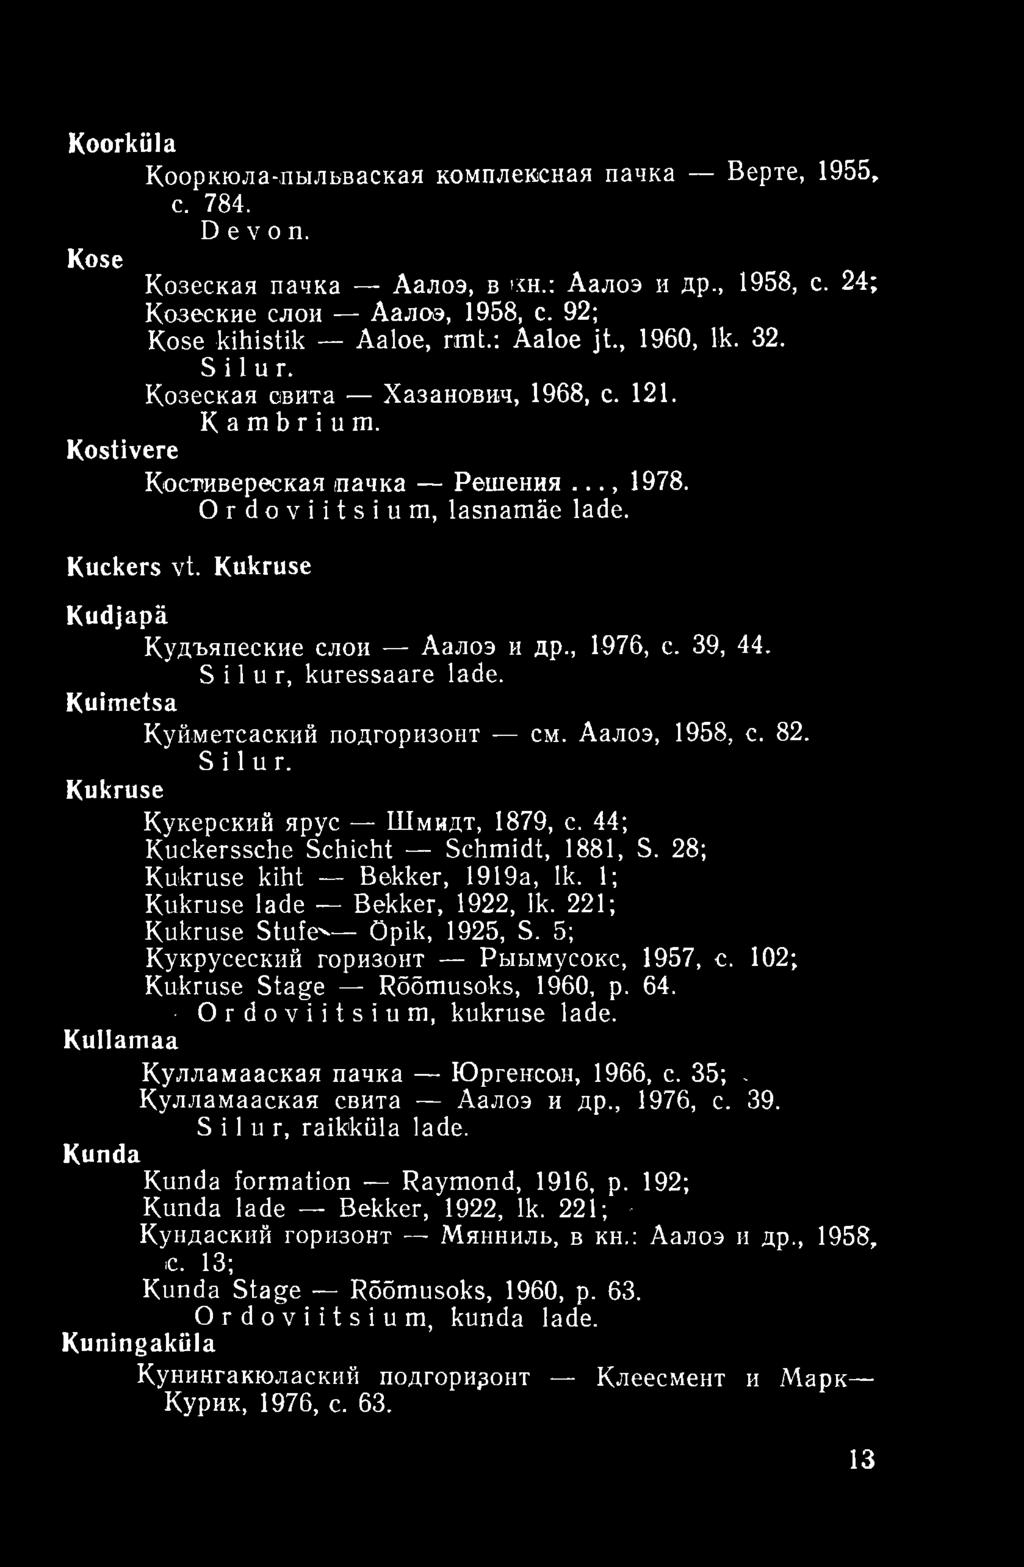 Kukruse Kudjapä Кудъяпеские слои Аалоэ и др., 1976, с. 39, 44. Silur, kuressaare lade. Kuimetsa Куйметсаский подгоризонт см. Аалоэ, 1958, с. 82. Silur. Kukruse Кукерский ярус Шмидт, 1879, с.